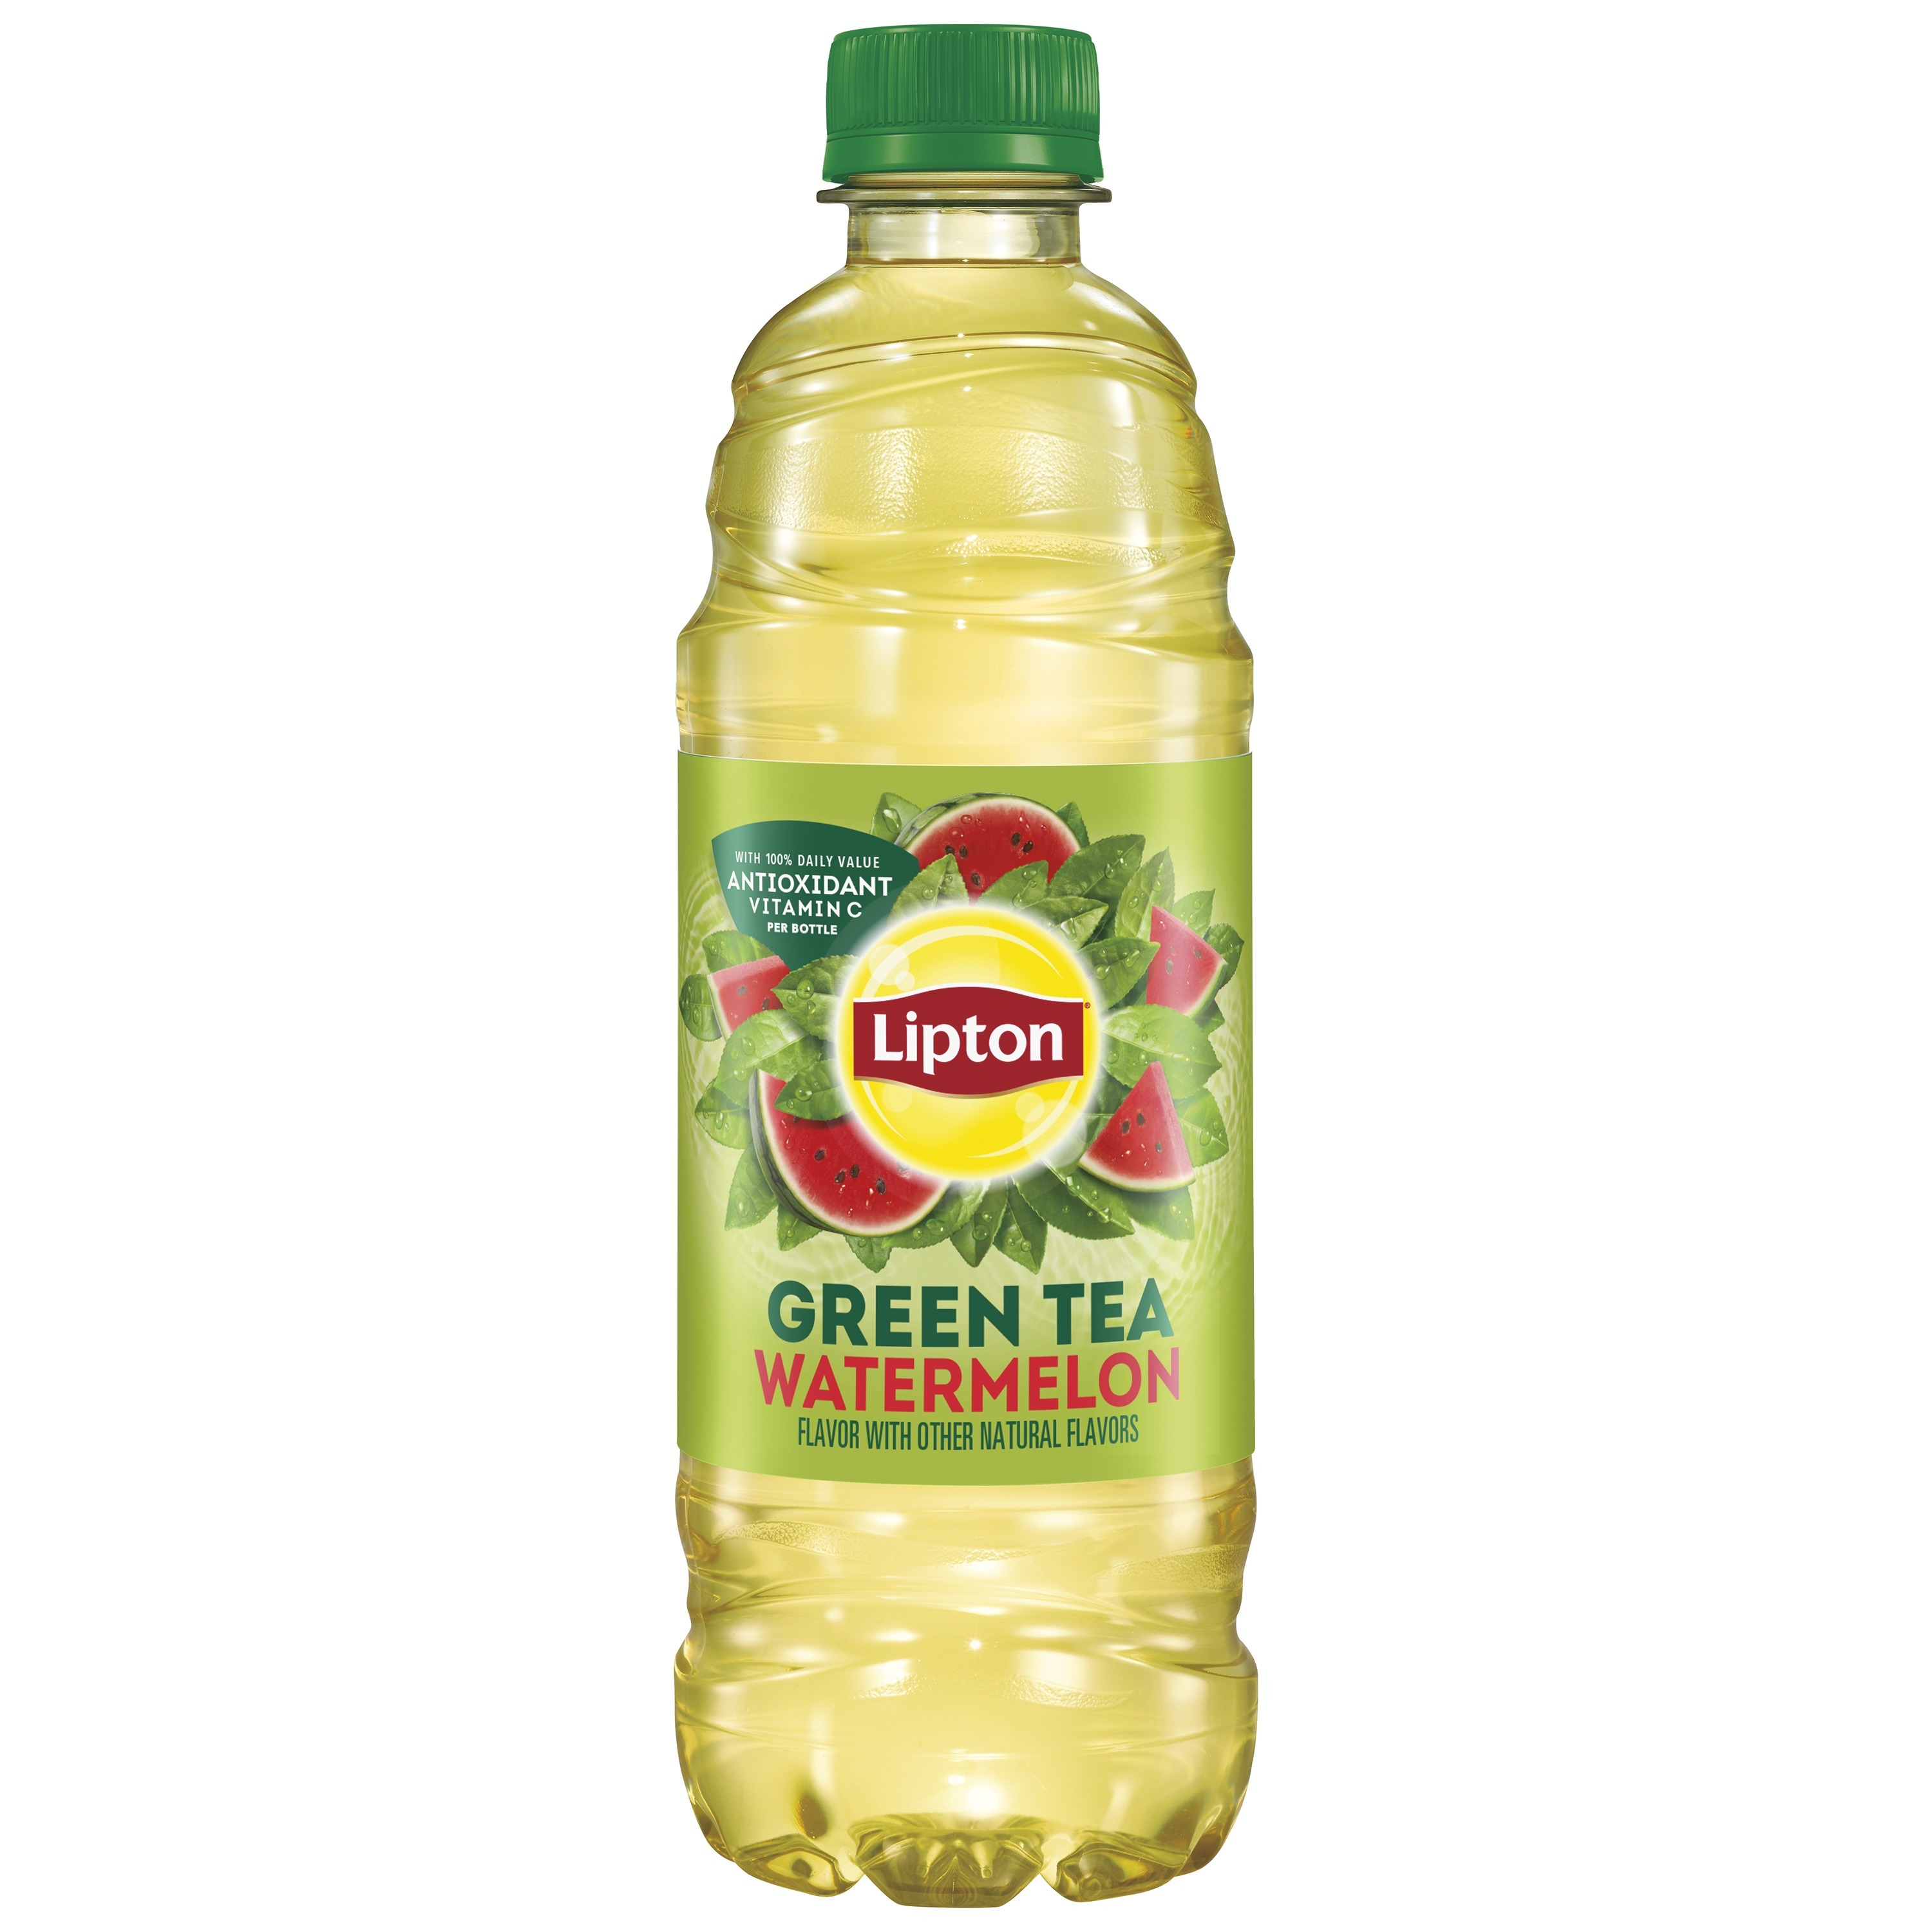 Lipton Green Tea Watermelon Iced Tea, Bottled Tea Drink, 16.9 fl oz 12 Pack Bottle - image 2 of 9